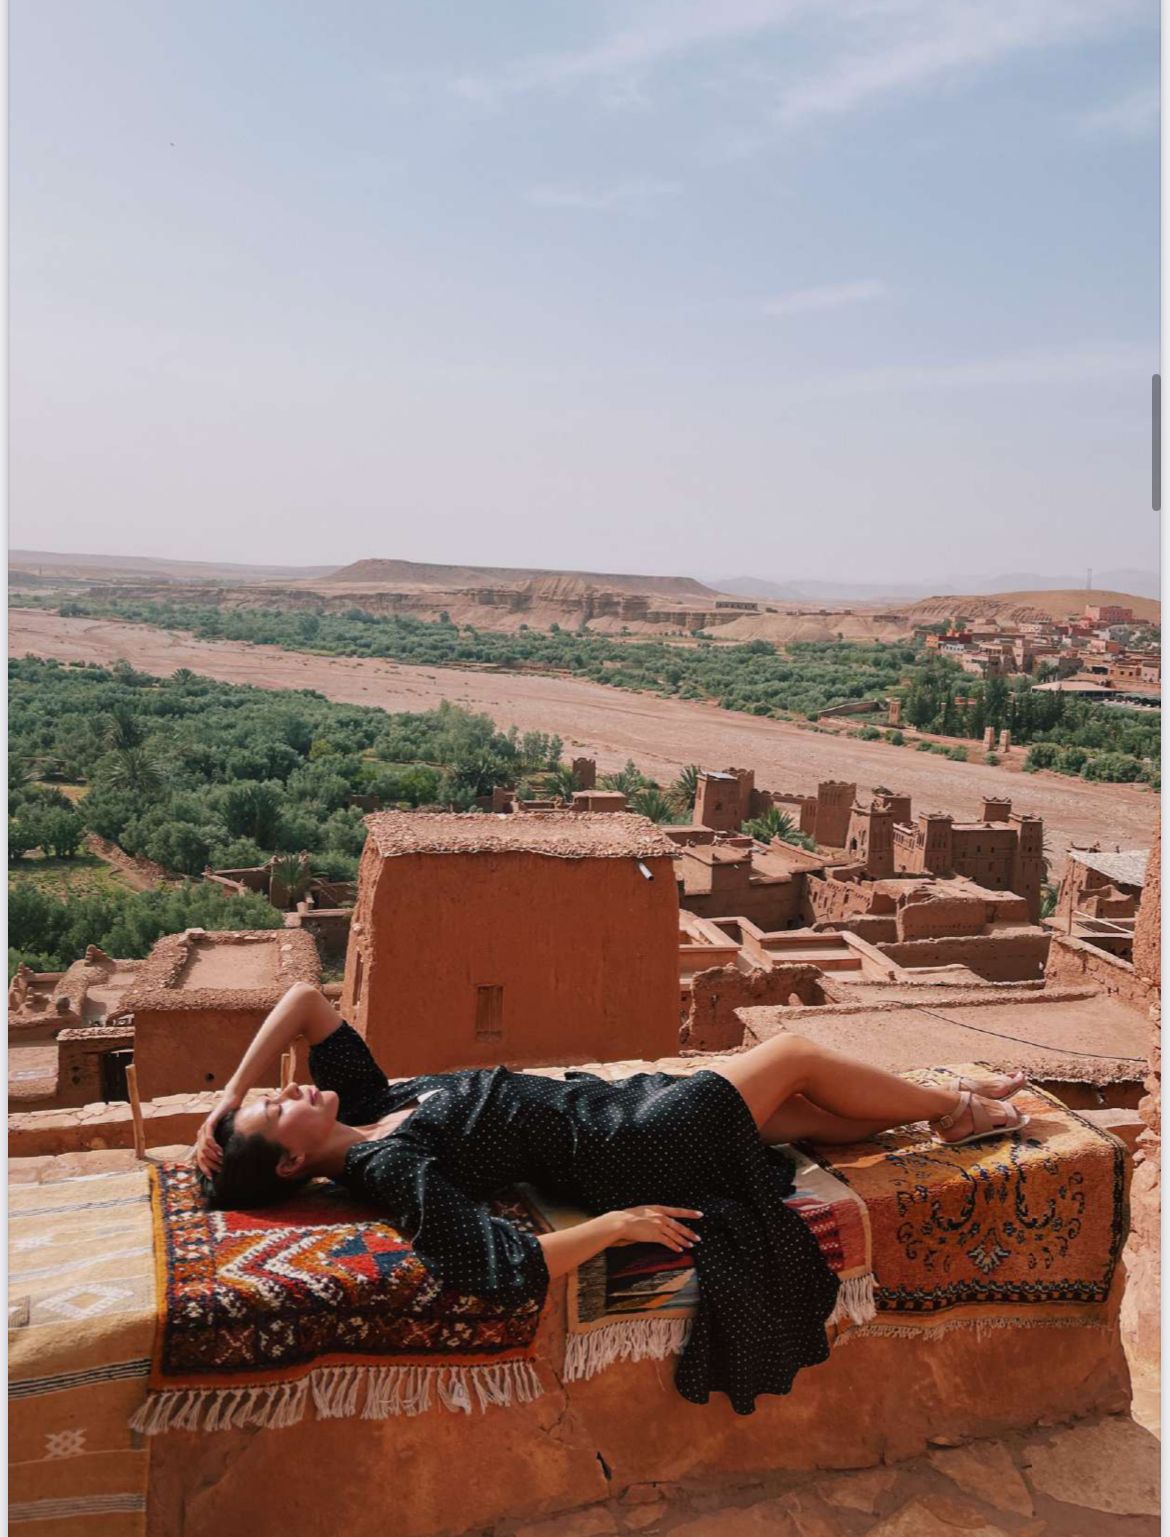 puteshestvie_v_marokko_ot_okeana_do_pustyni_marokko